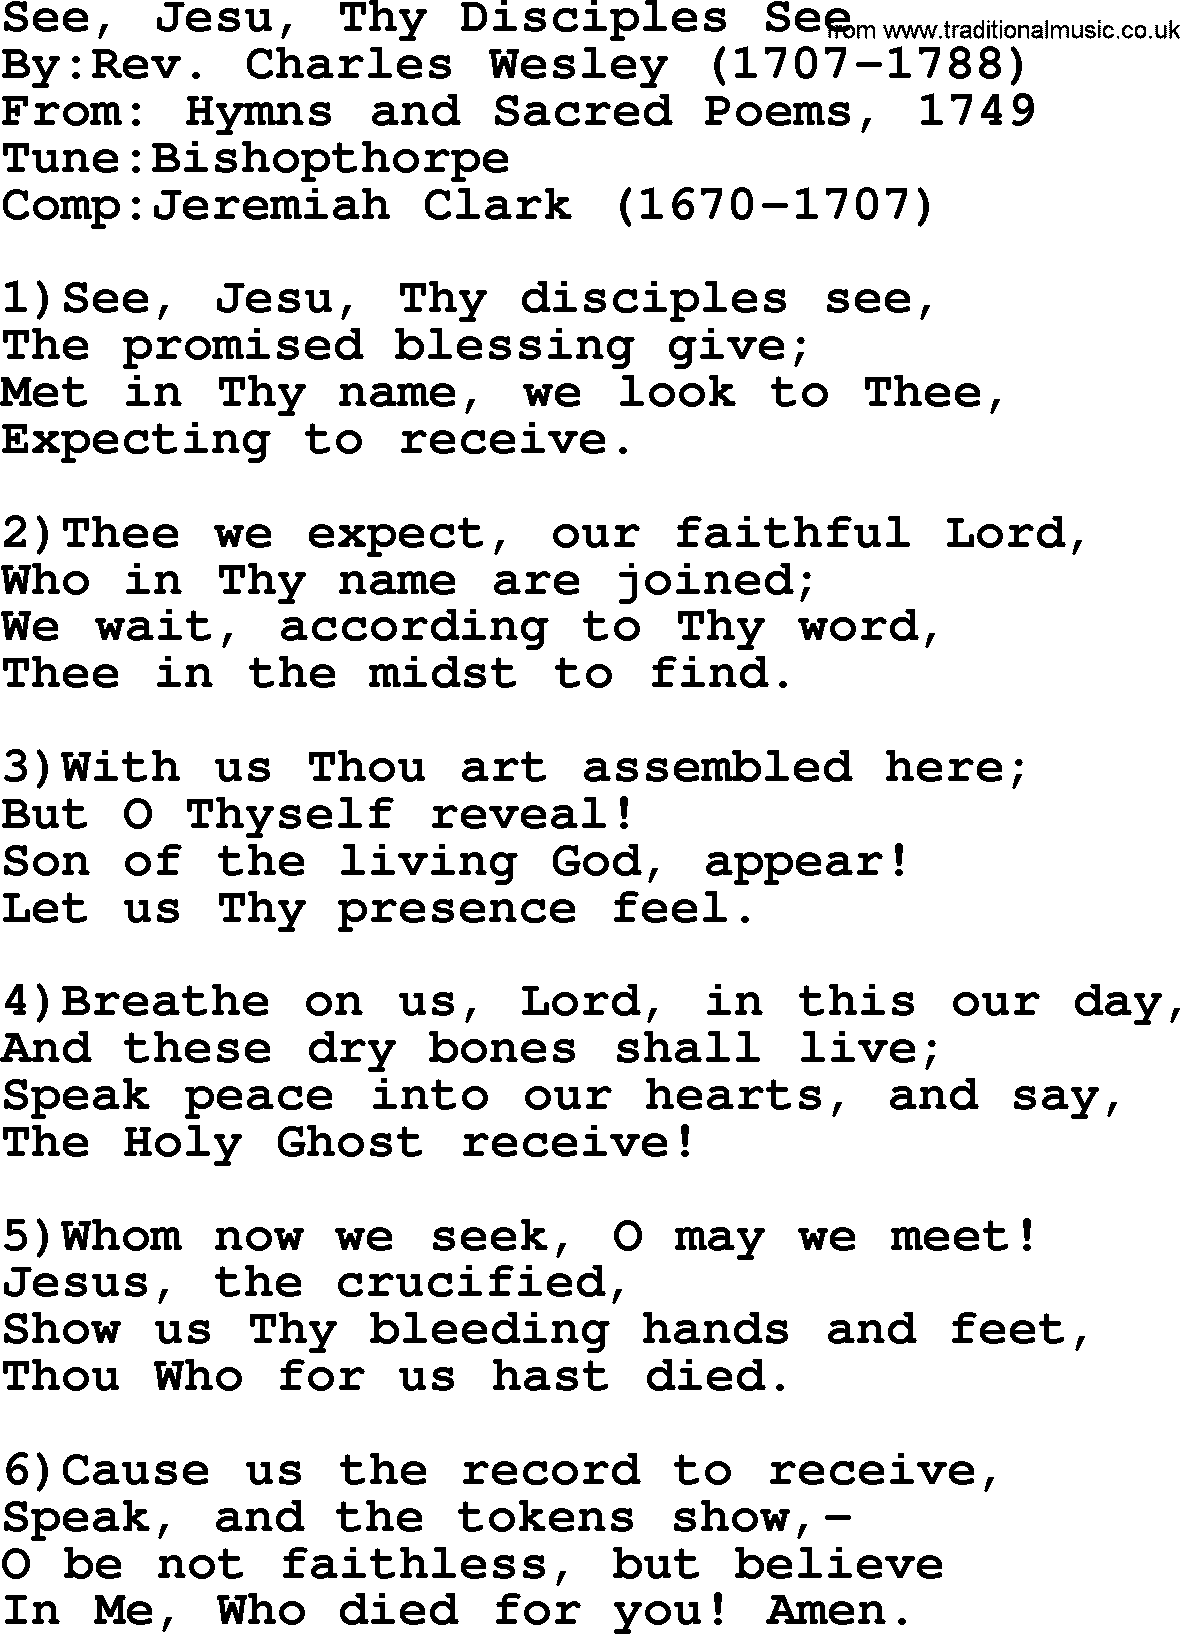 Methodist Hymn: See, Jesu, Thy Disciples See, lyrics